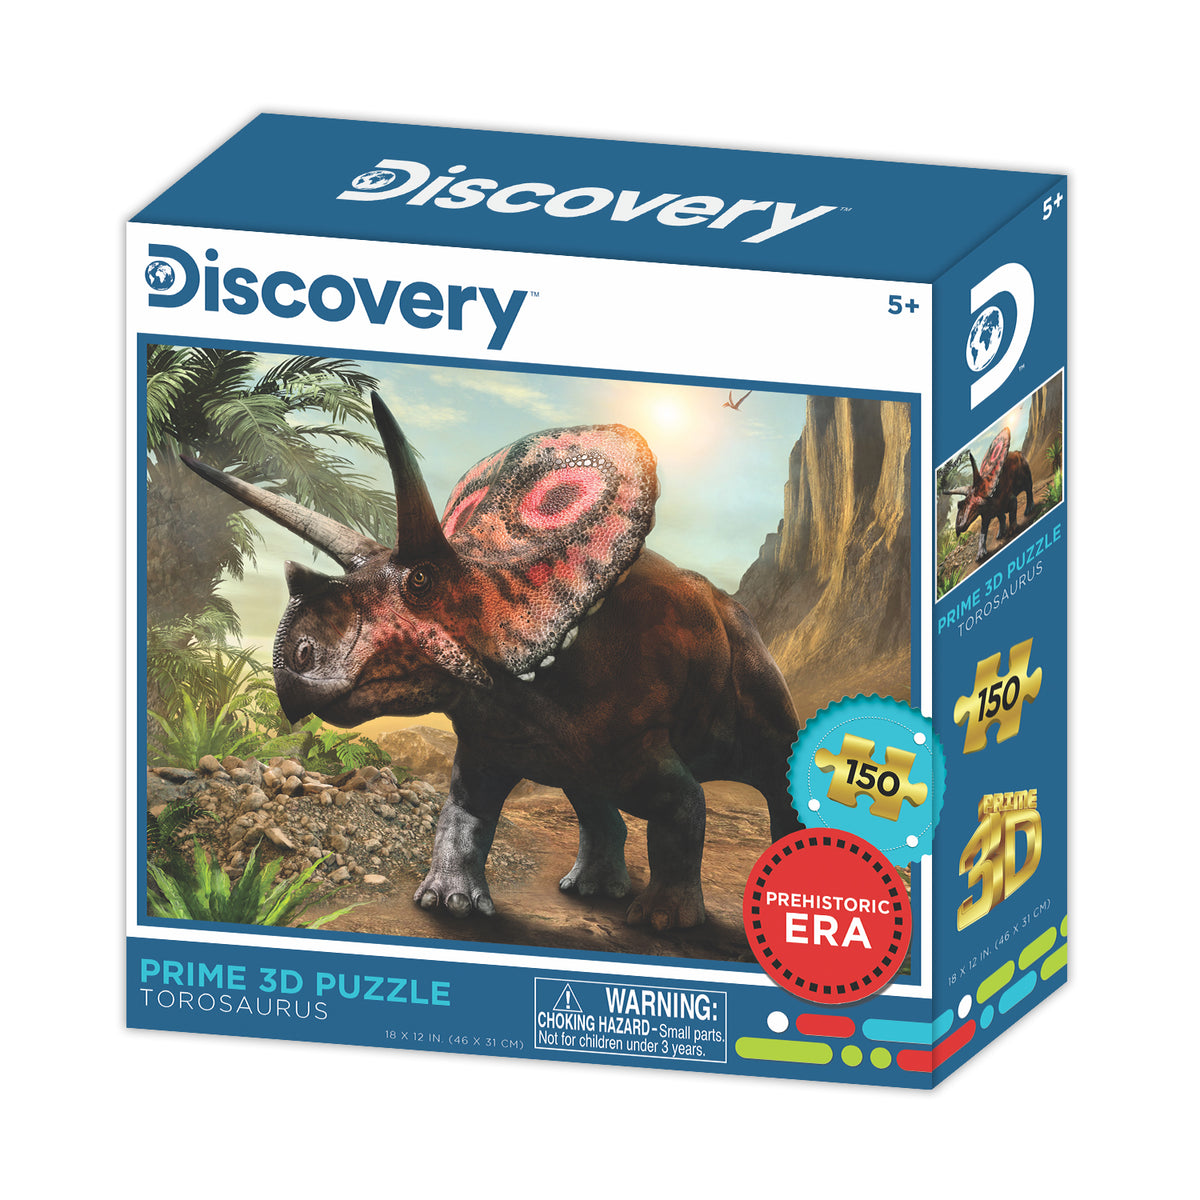 Torosaurus Discovery 3D Jigsaw Puzzle 20847 150pc 18x12"